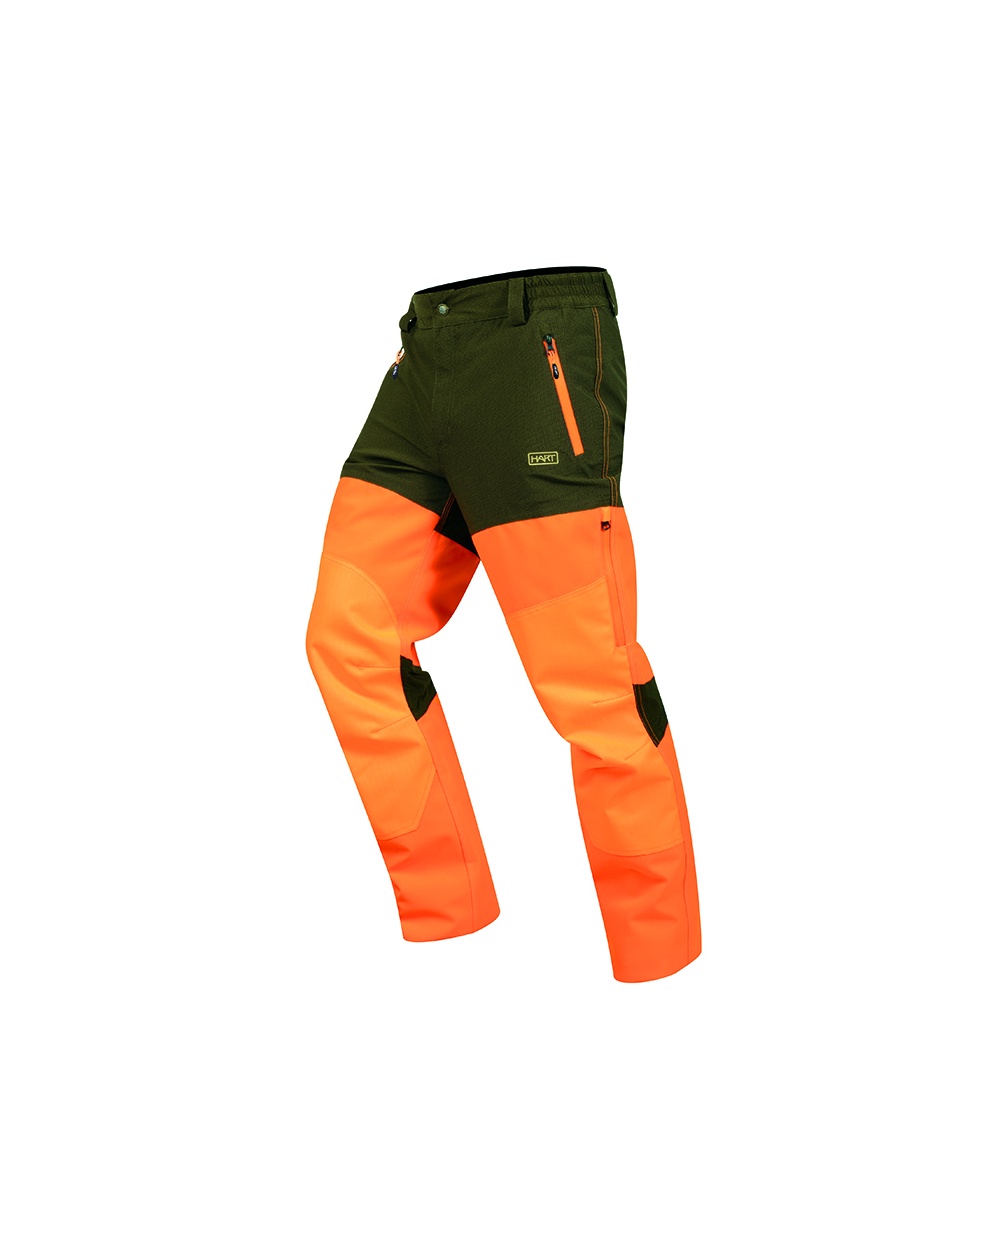 compra pantalon Hart WILDPRO-T color naranja blaze para resacadores